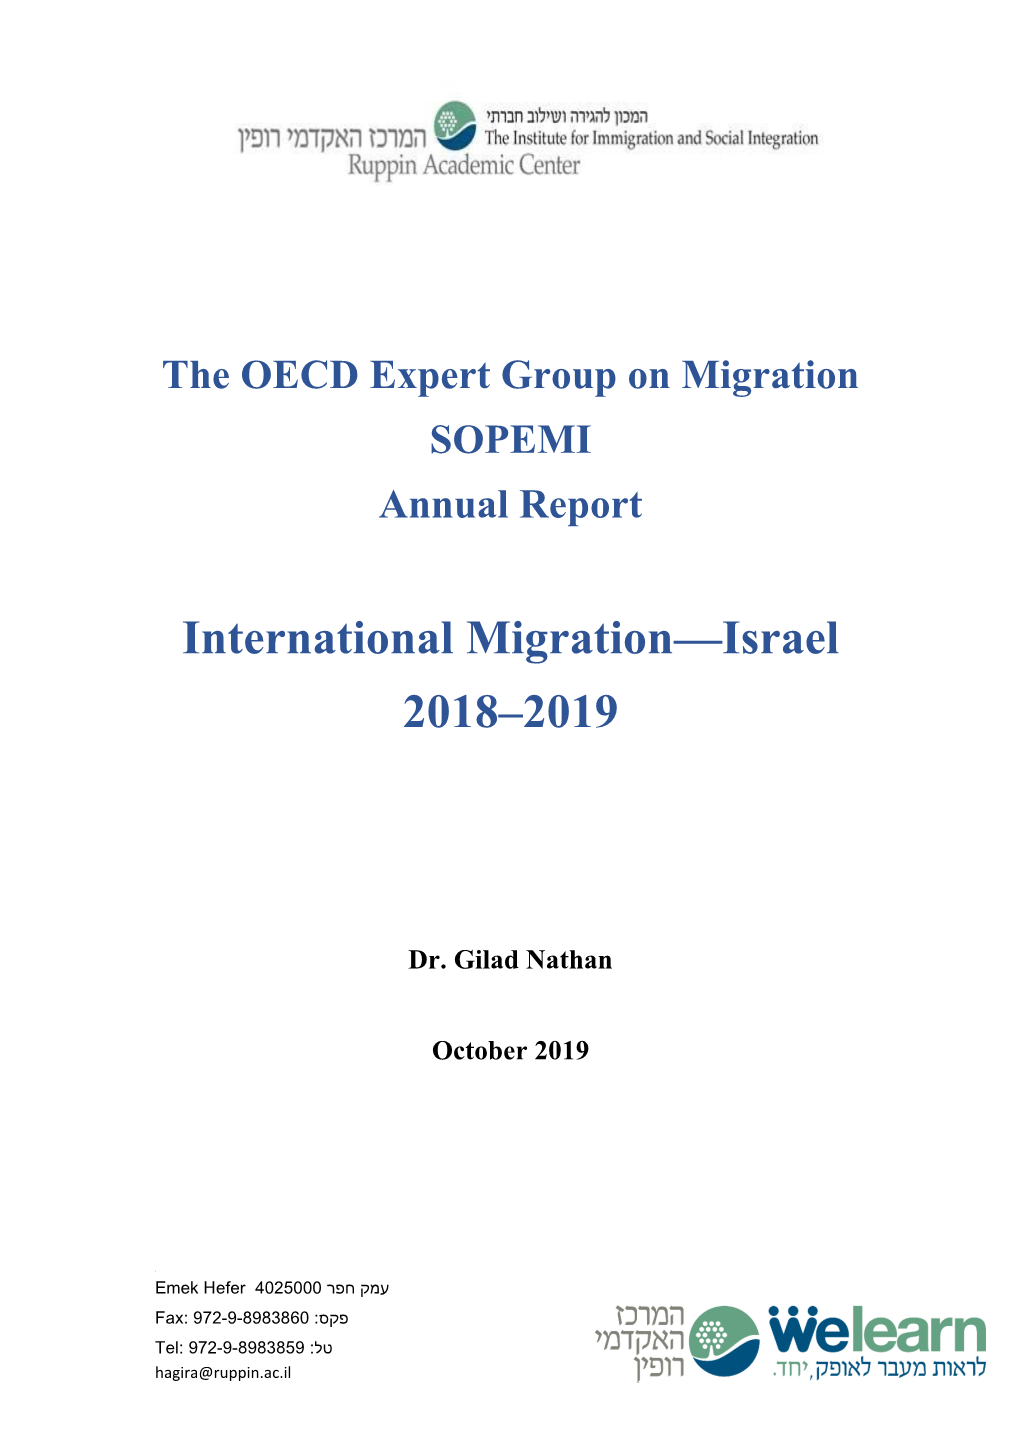 International Migration—Israel 2018–2019